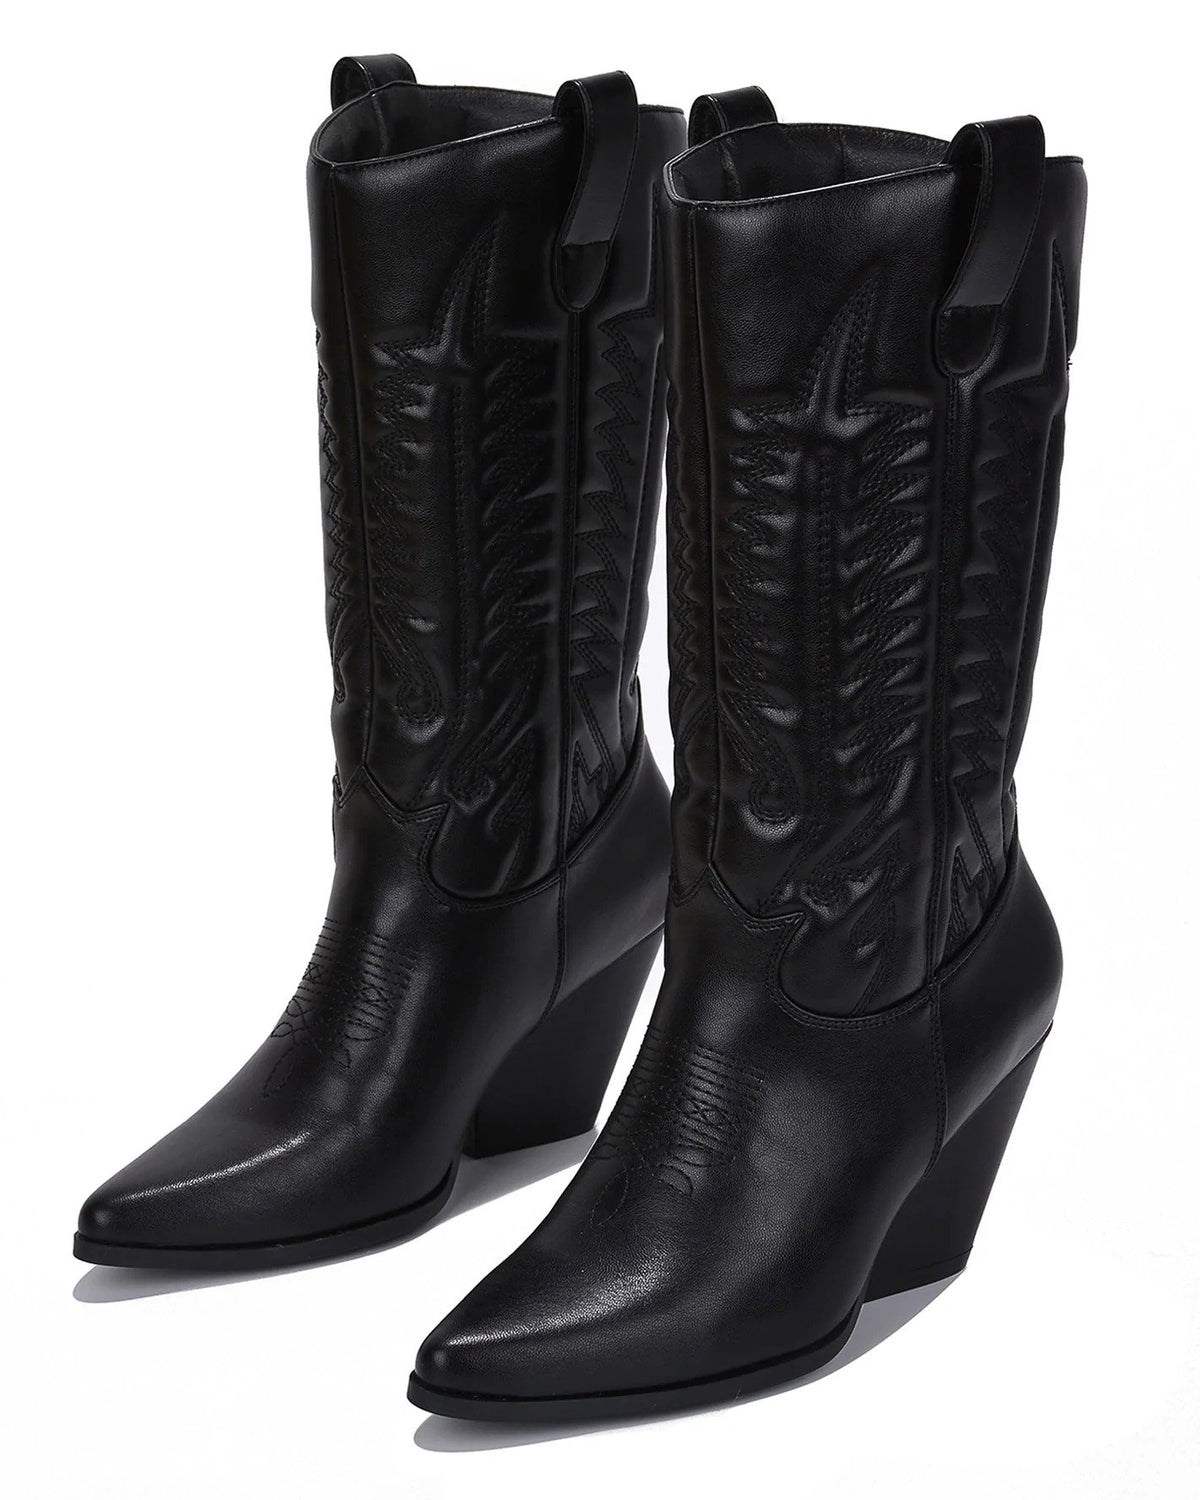 Southern Belle Black Cowboy Boots